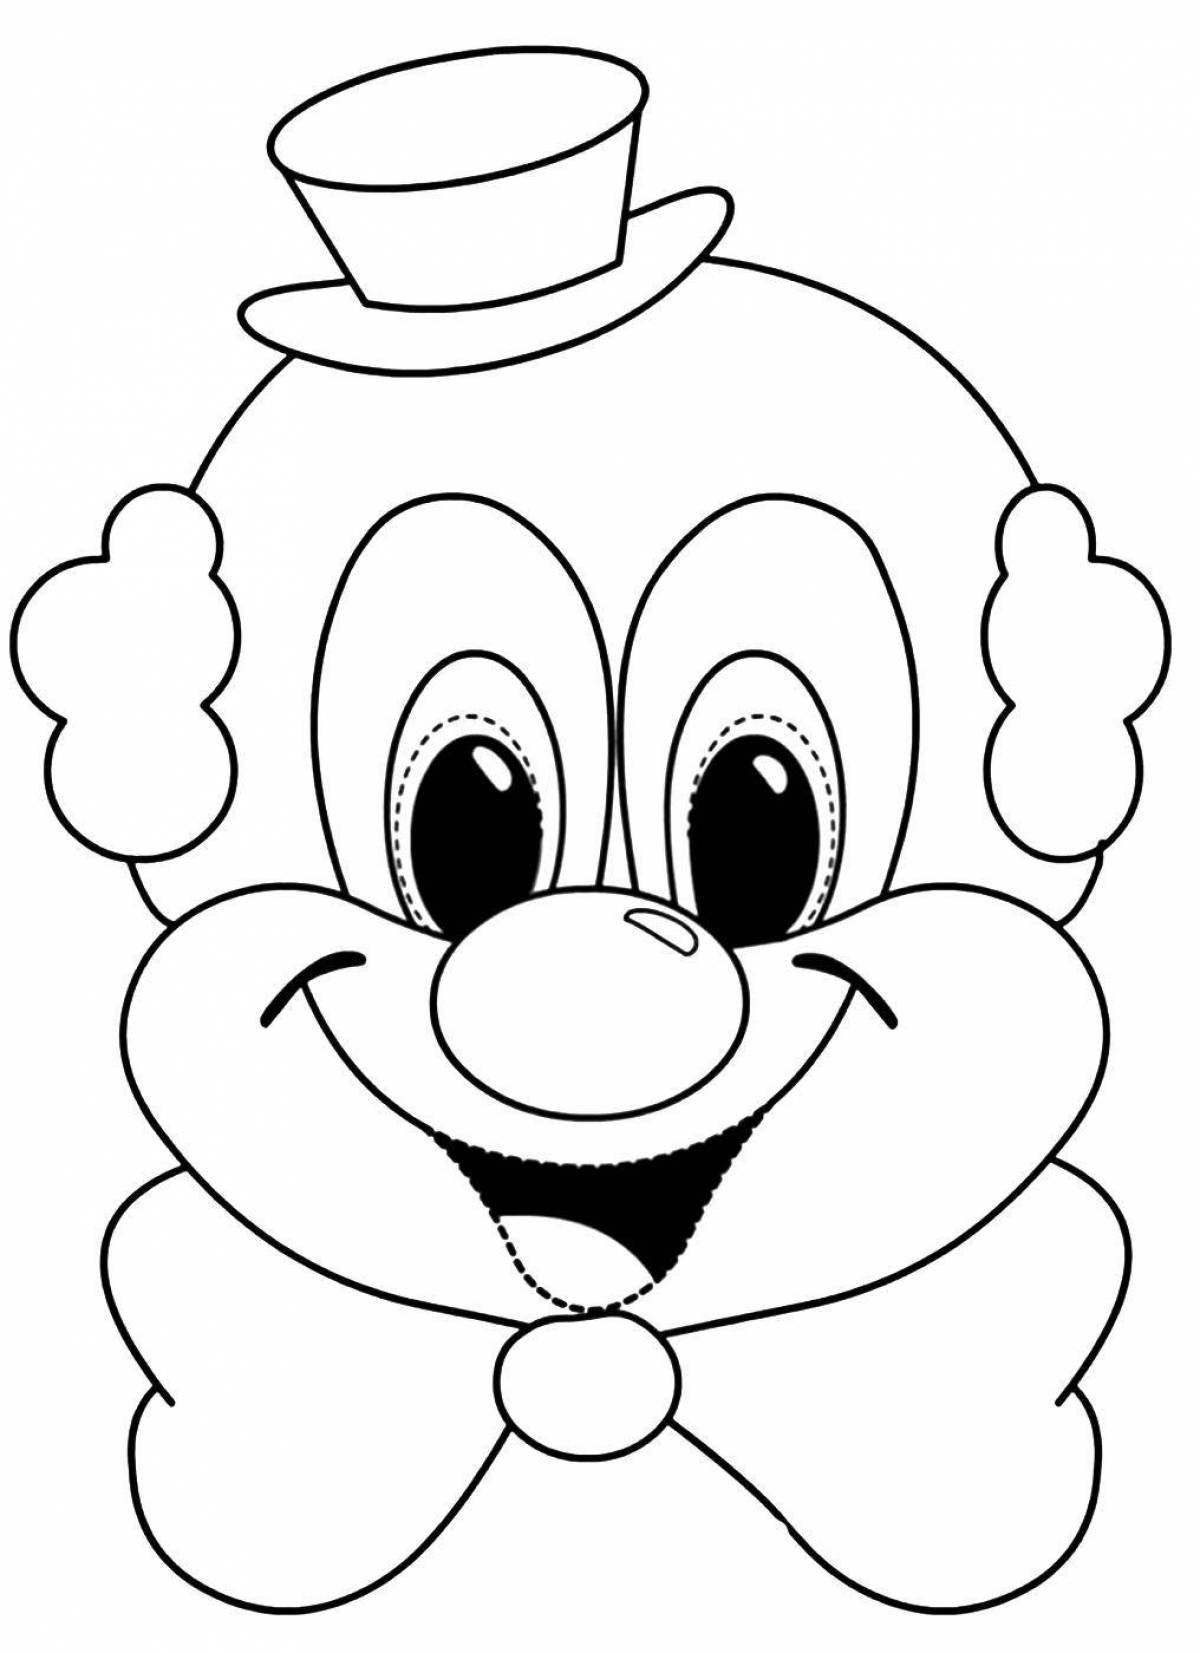 Шаблон маски клоуна распечатать. Лицо клоуна раскраска. Лицо клоуна раскраски для детей. Аппликация "клоун". Голова клоуна раскраска.